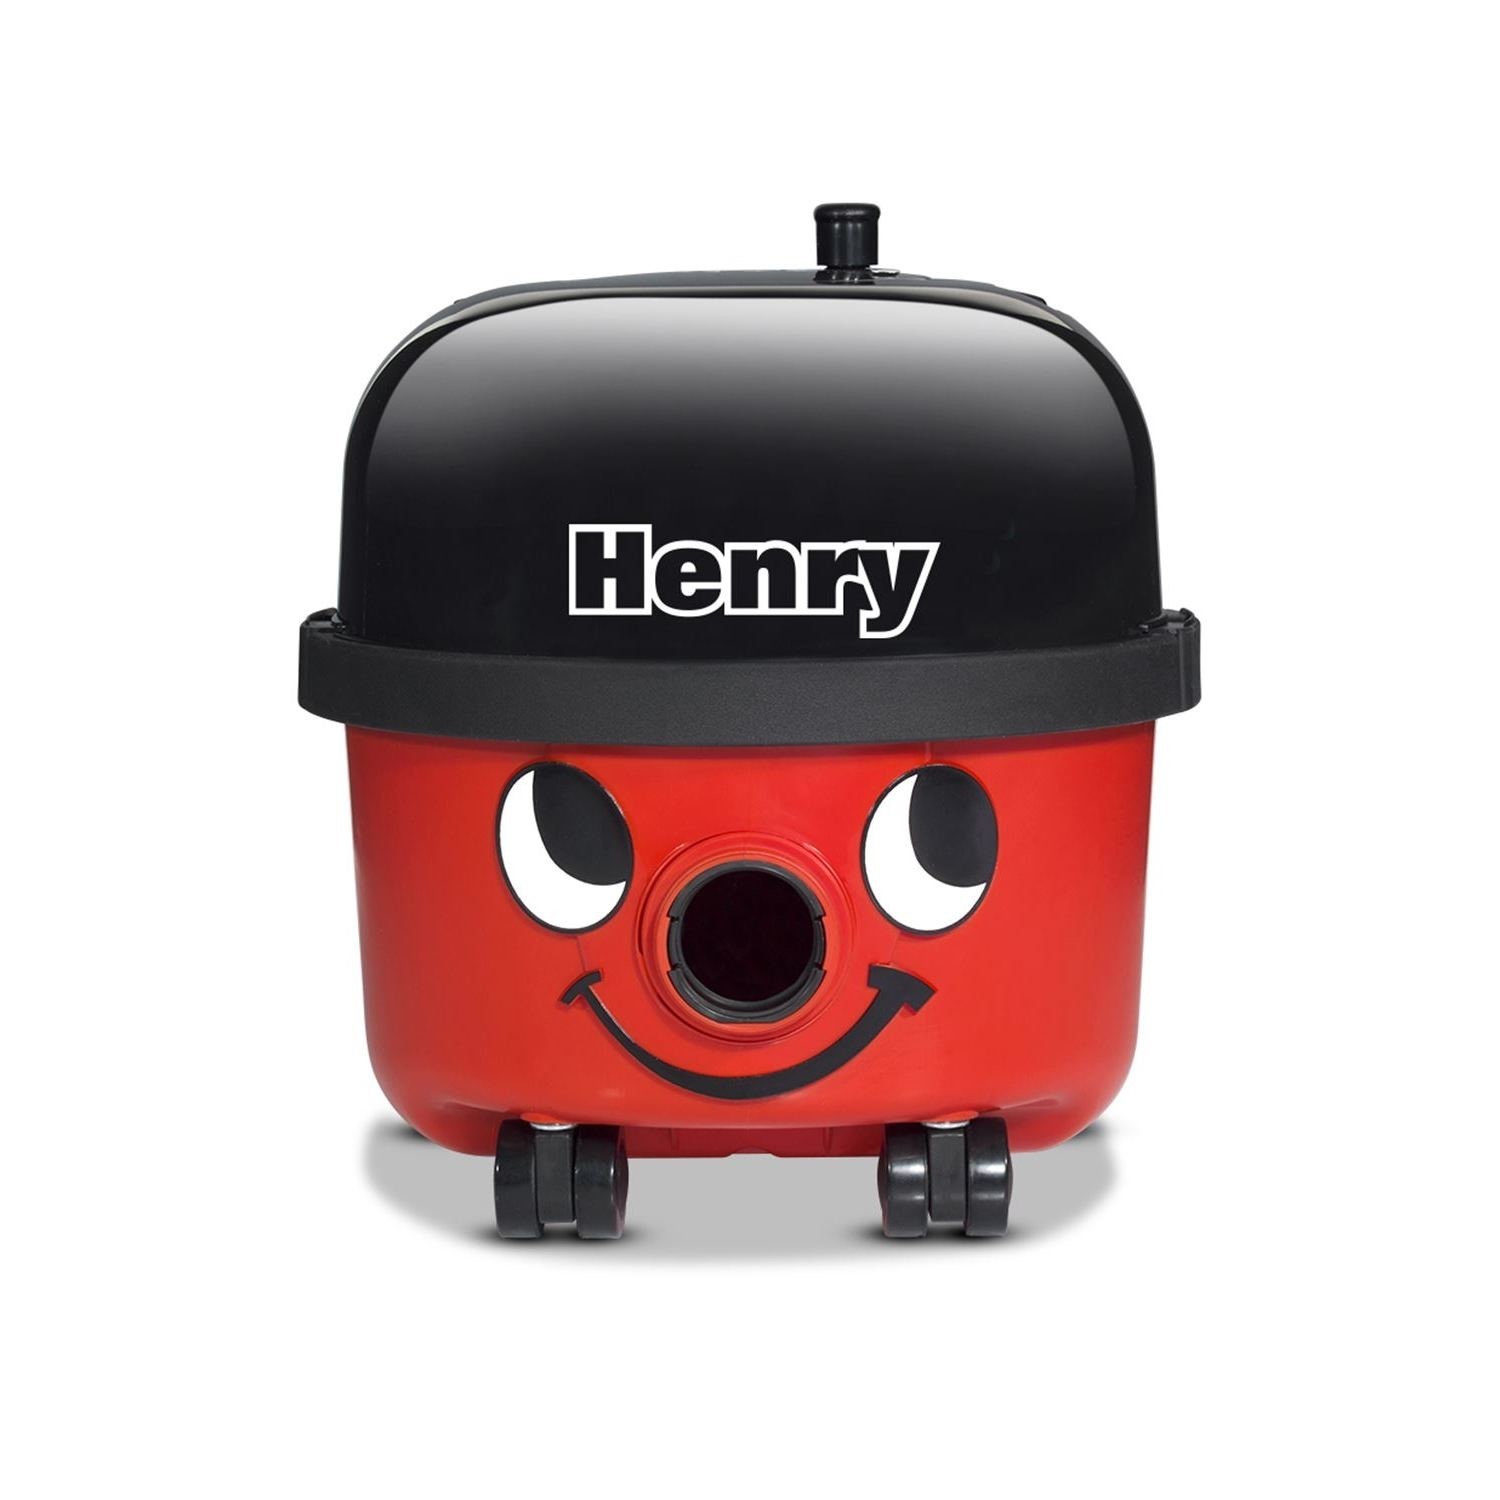 Numatic HVT160 Henry Turbo Bagged Vacuum Cleaner 